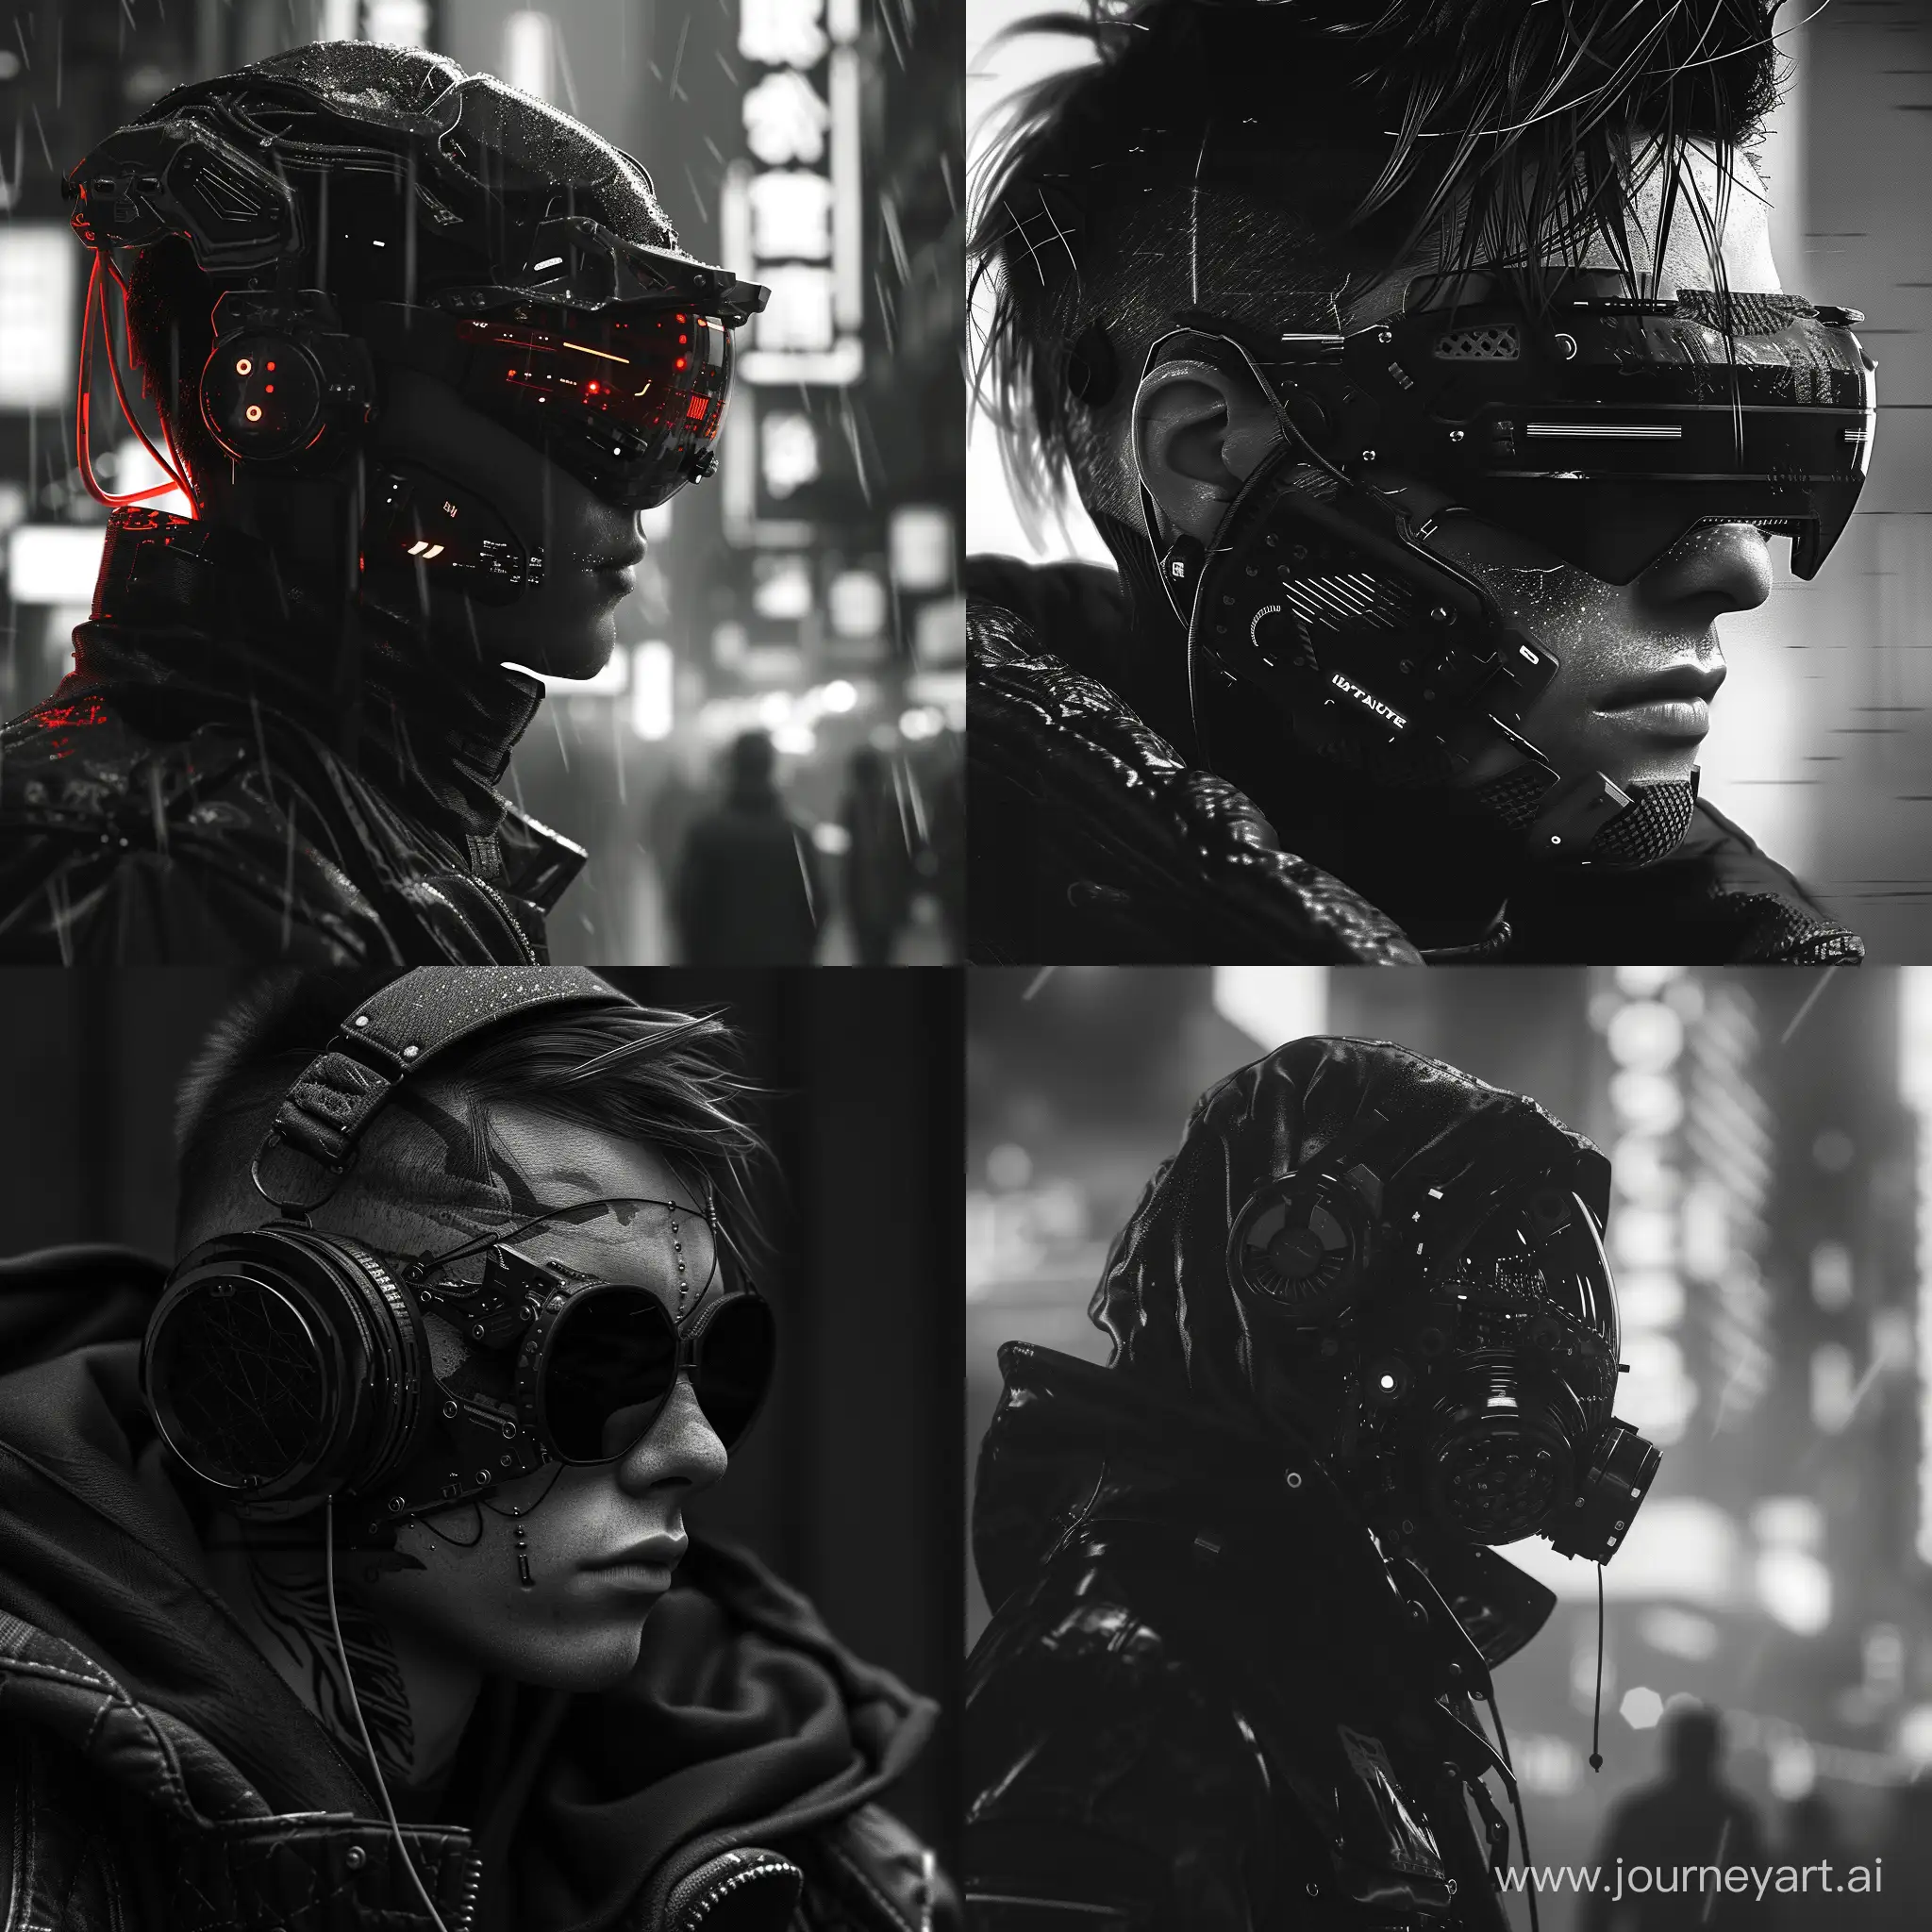 Futuristic-Cyberpunk-Profile-Picture-in-HighContrast-Black-and-White-Tones